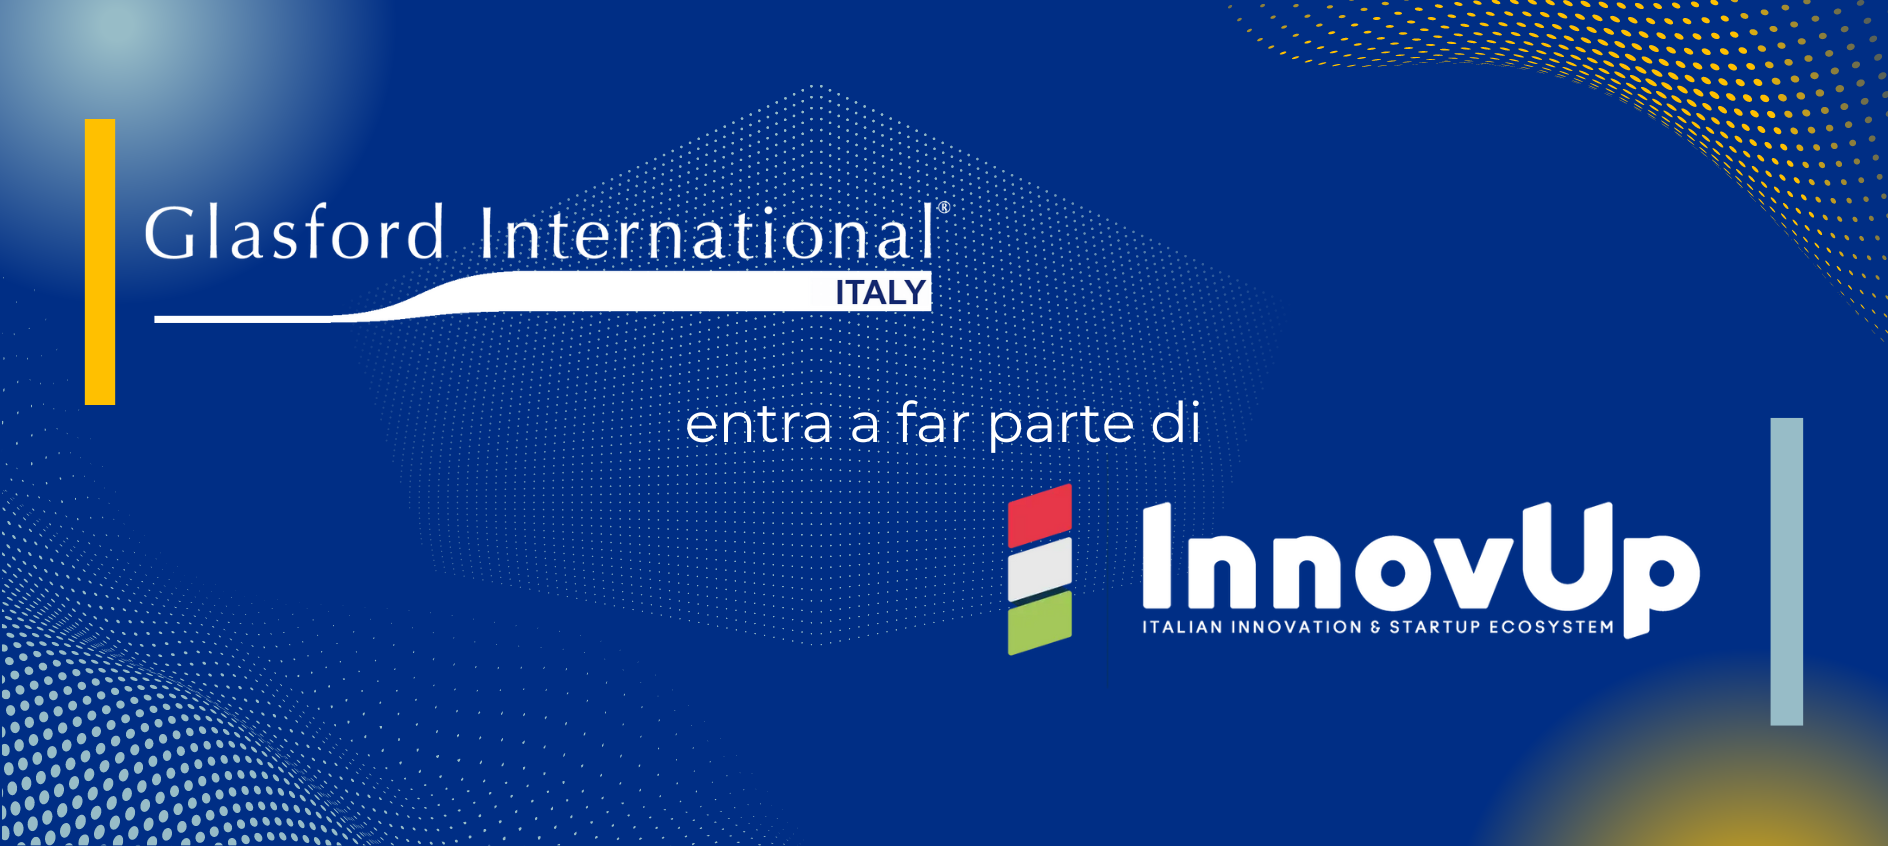 Glasford International Italy entra a far parte di InnovUp